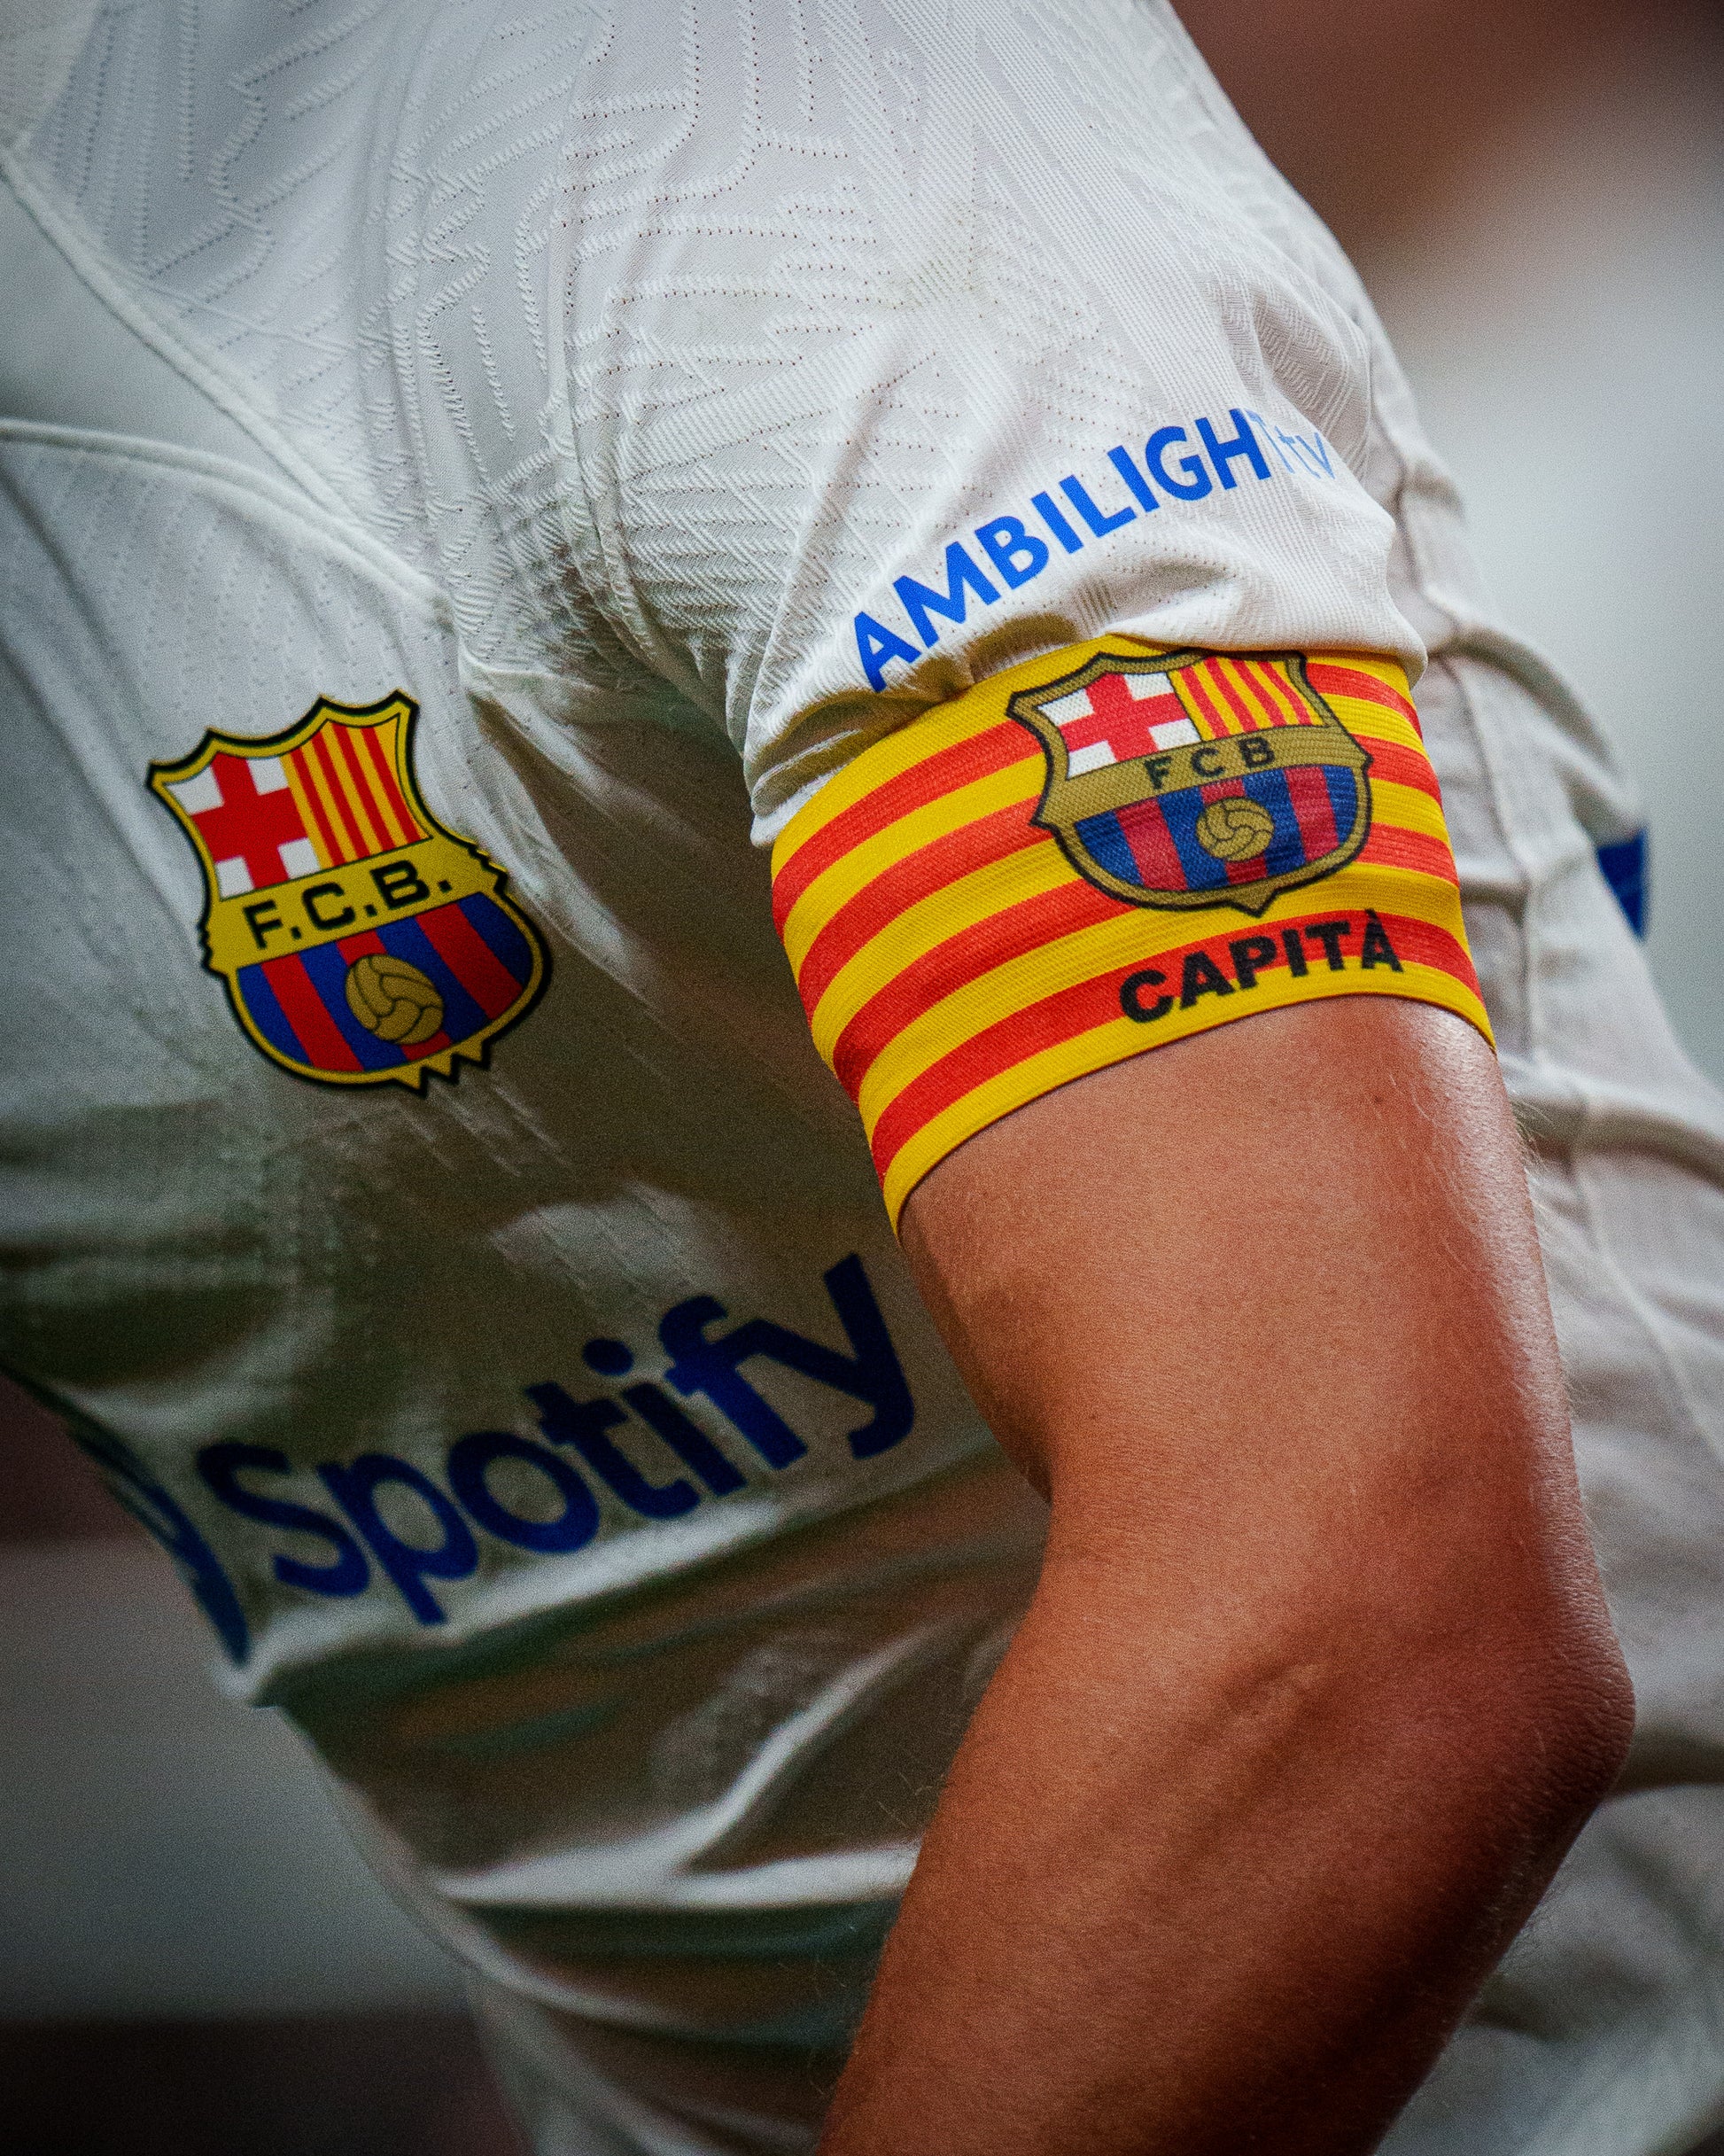 Braçalet capitans del FC Barcelona - Adult